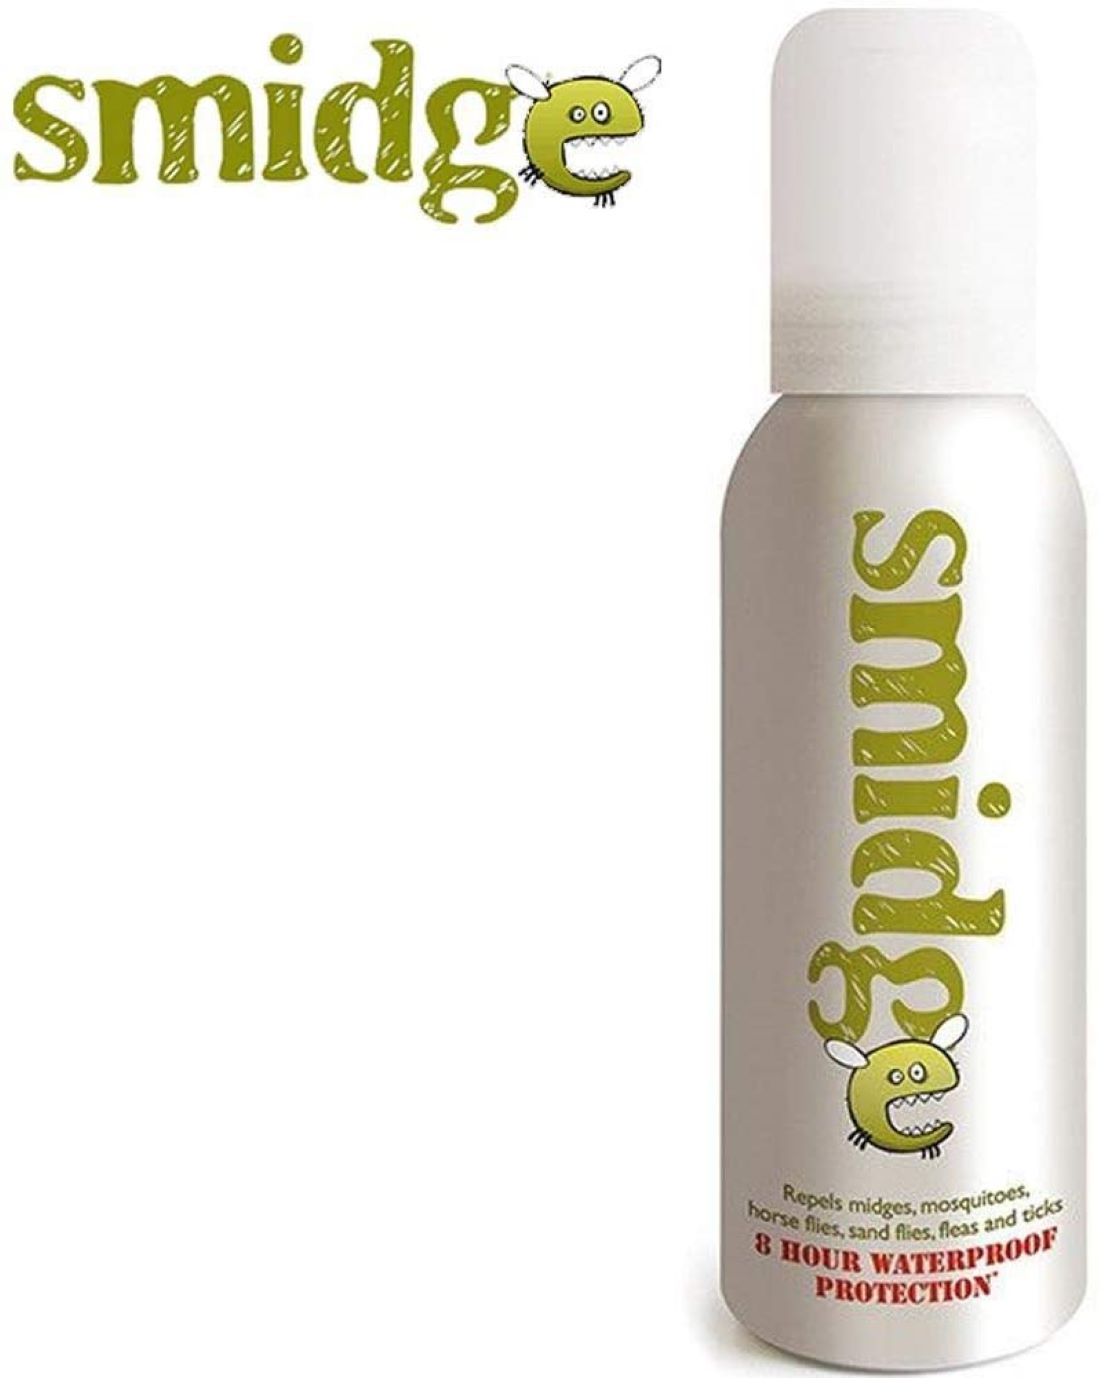 Smidge Midge and Insect Repellent Spray - 12 Pack